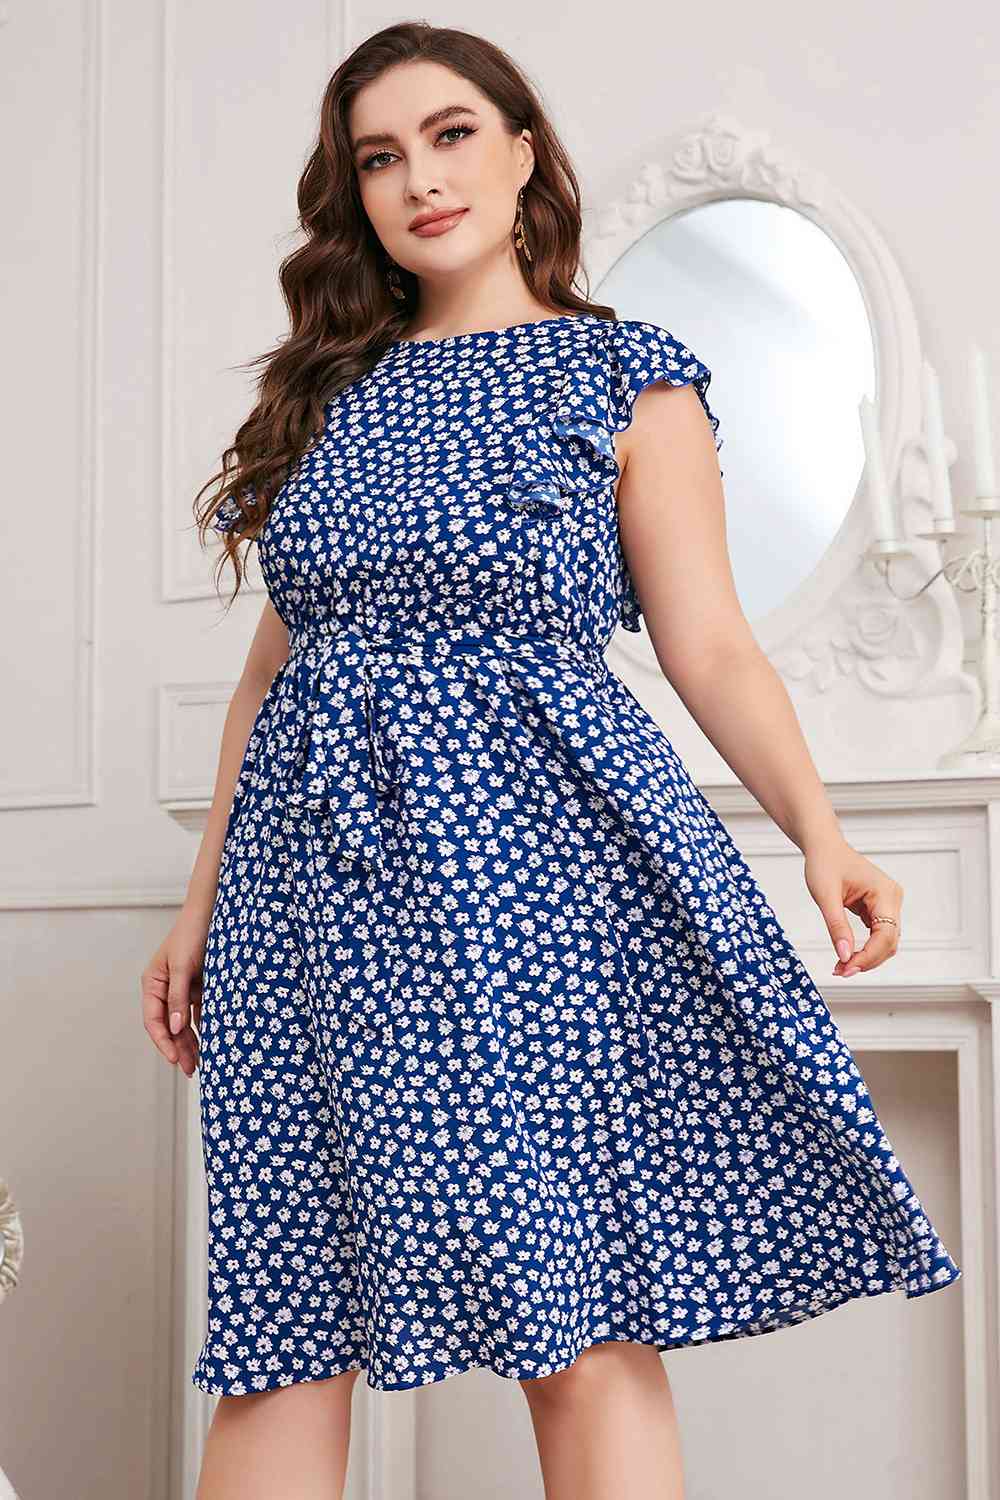 TEEK - Cobalt Blue Plus Size Tie Waist Dress DRESS TEEK Trend 1XL  